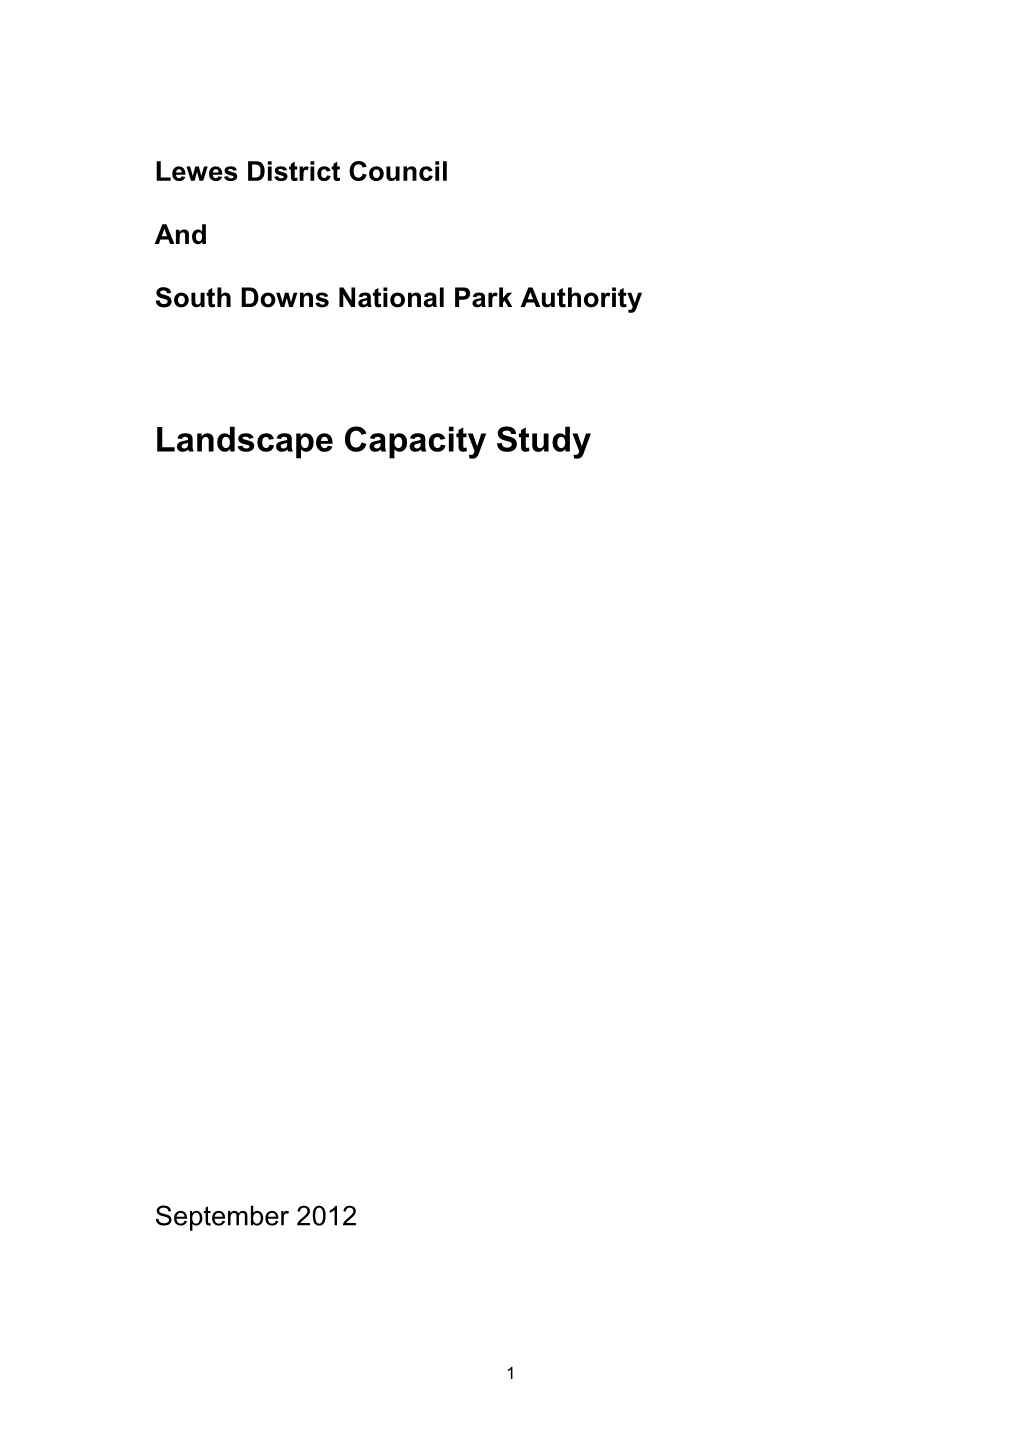 Landscape Capacity Study